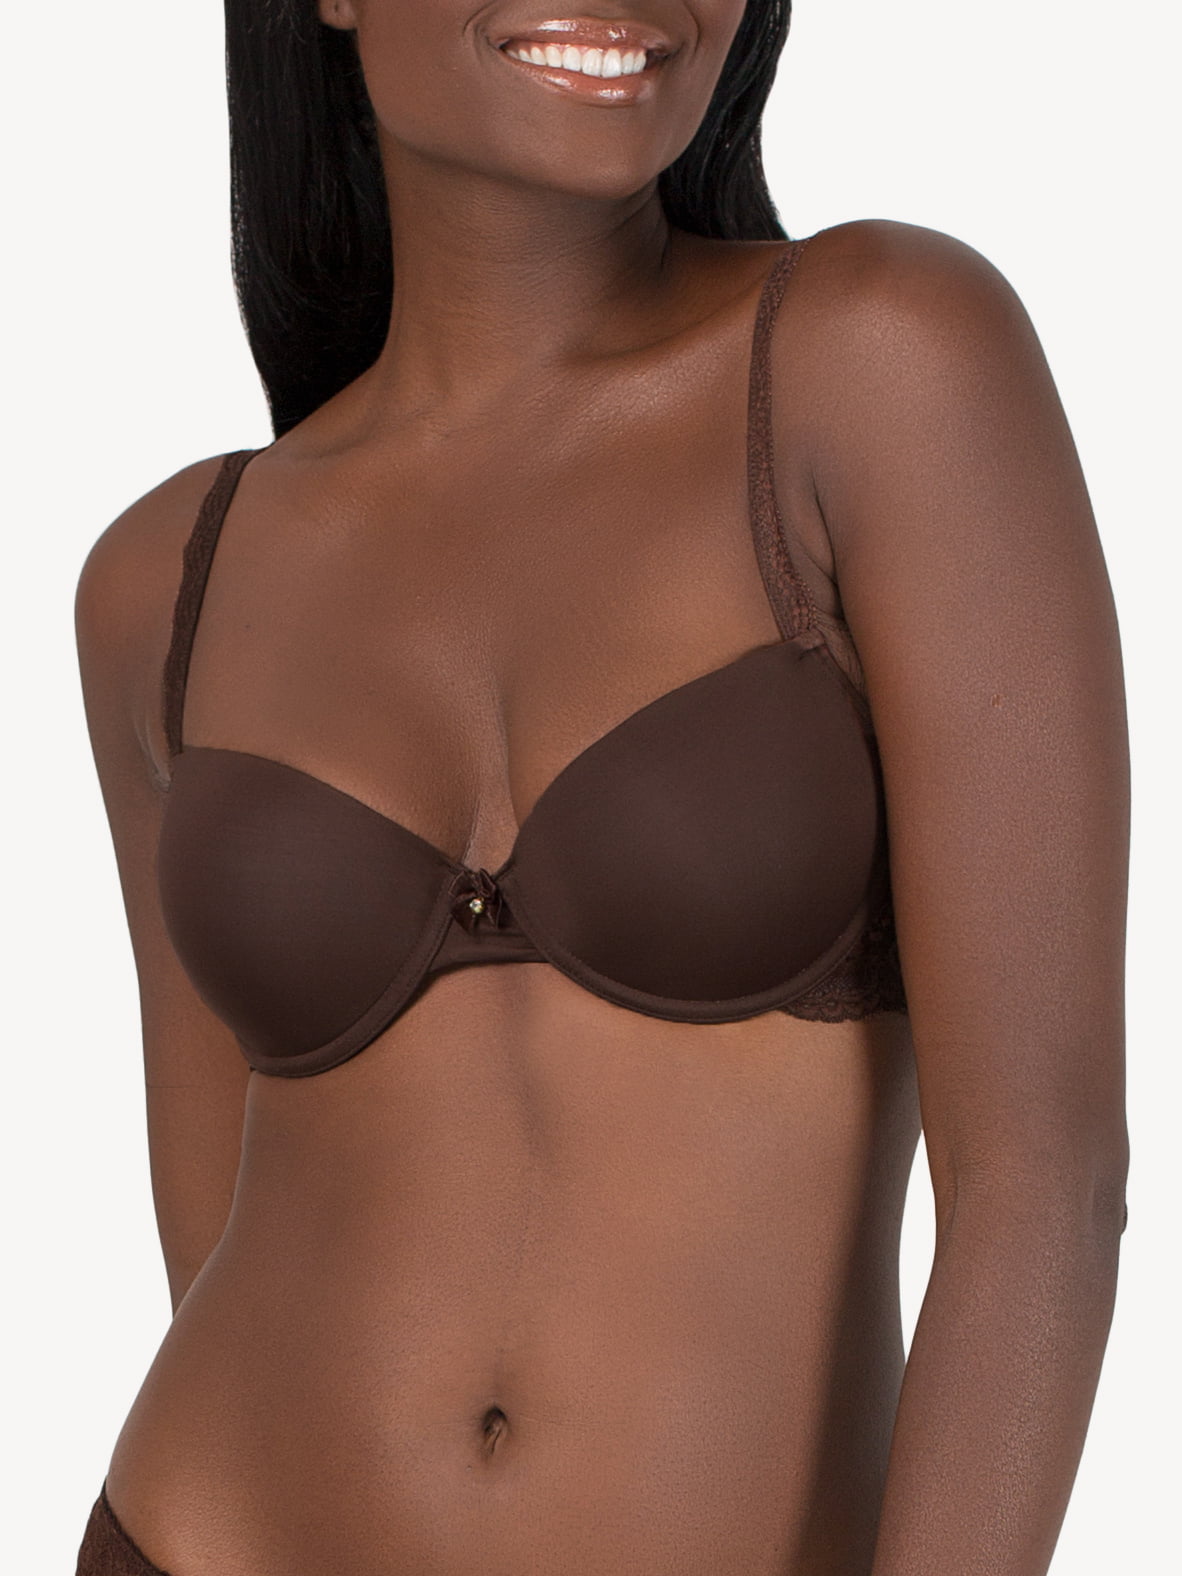 Women's Skin Tone Nude Push-Up Bra, Style SA895